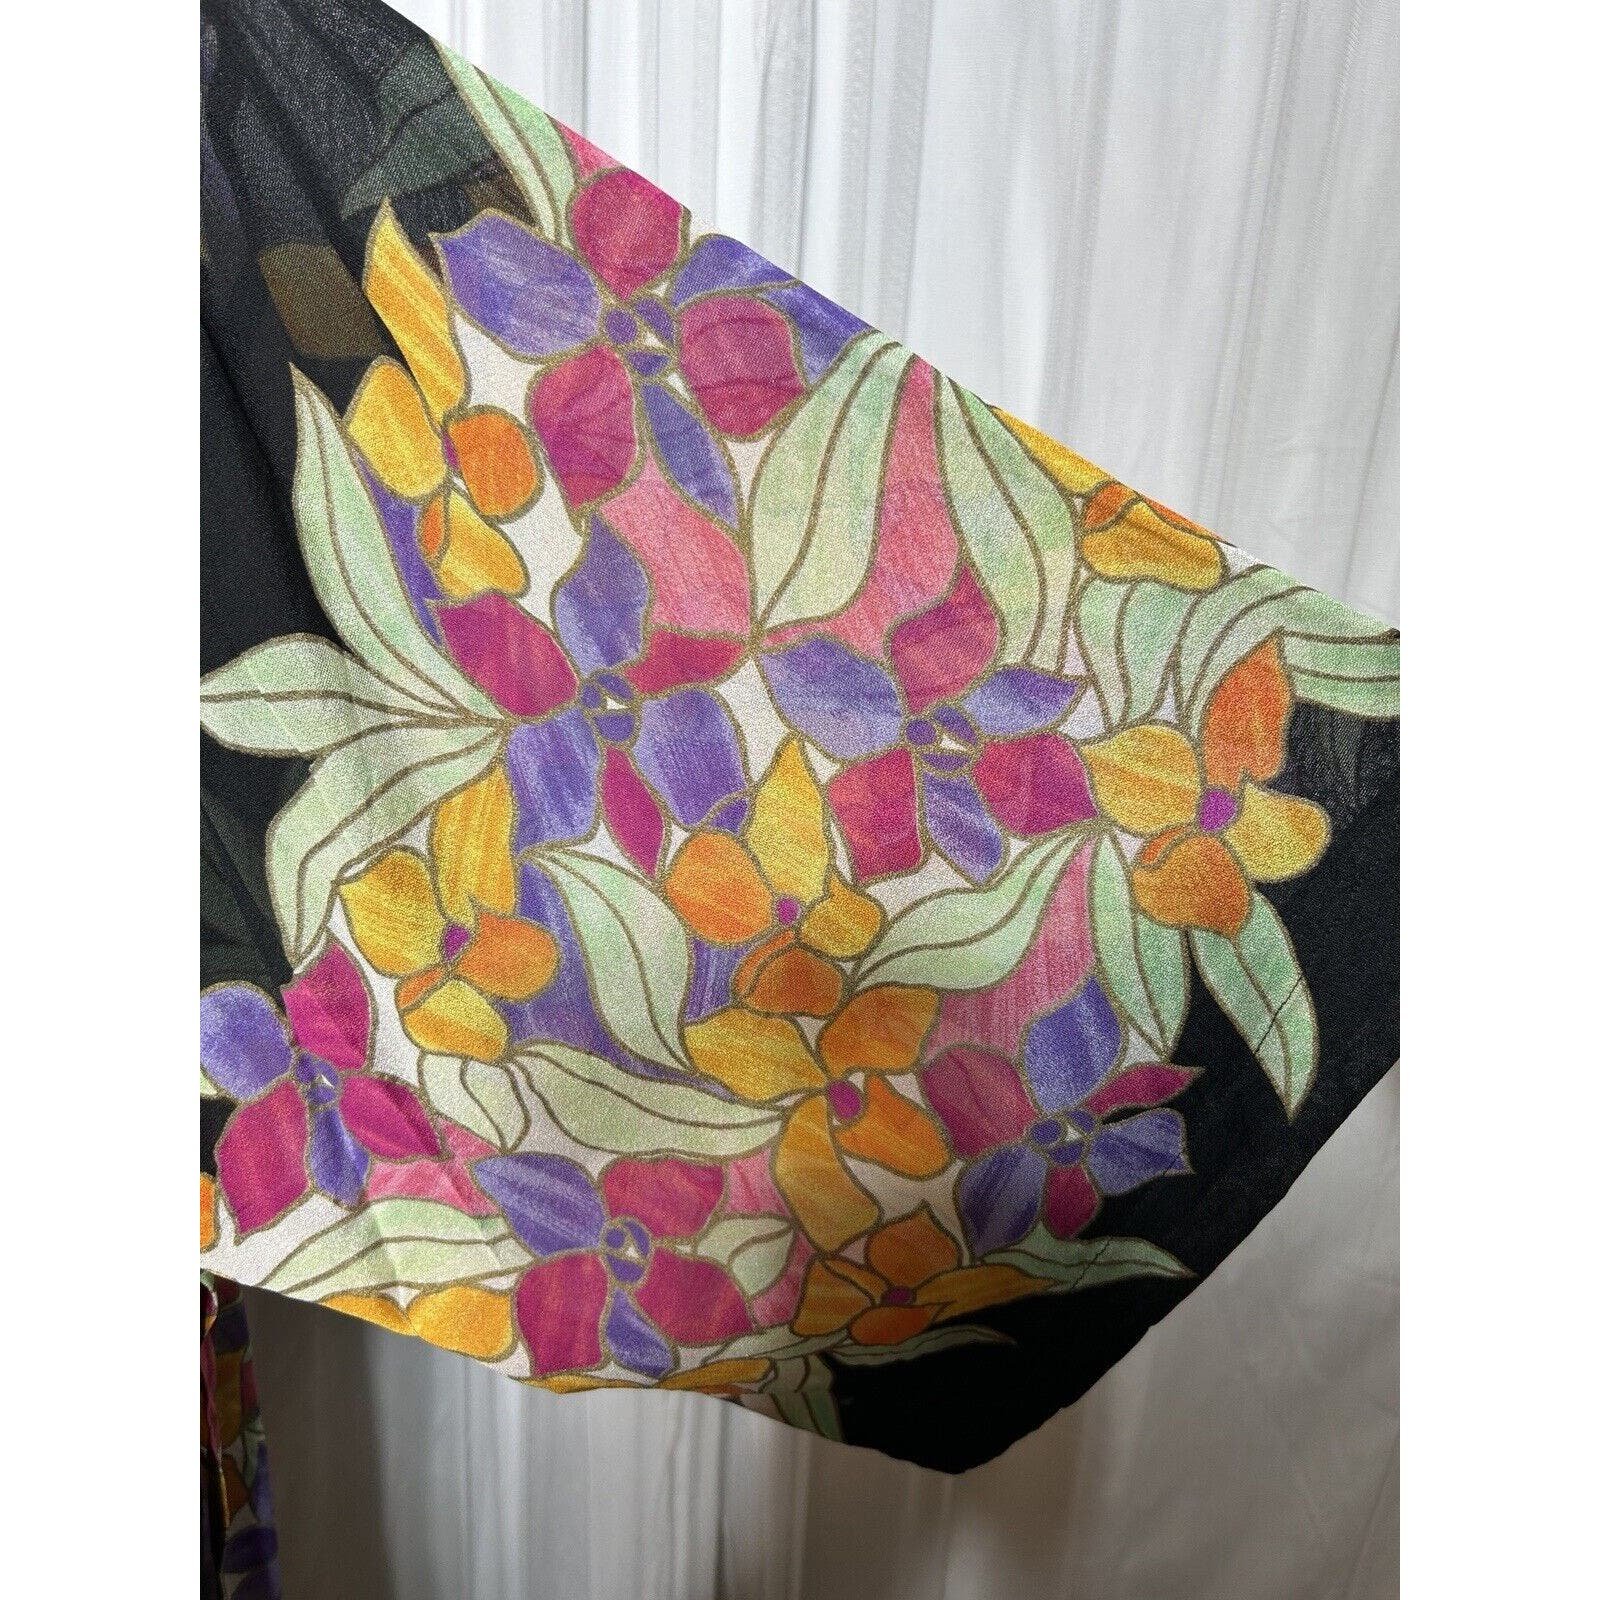 where to buy  Gottex Womens SMALL Kimono Cover Up Wrap Cardigan Semi-Sheer Pineapples - AC JowhOak4w Store Online